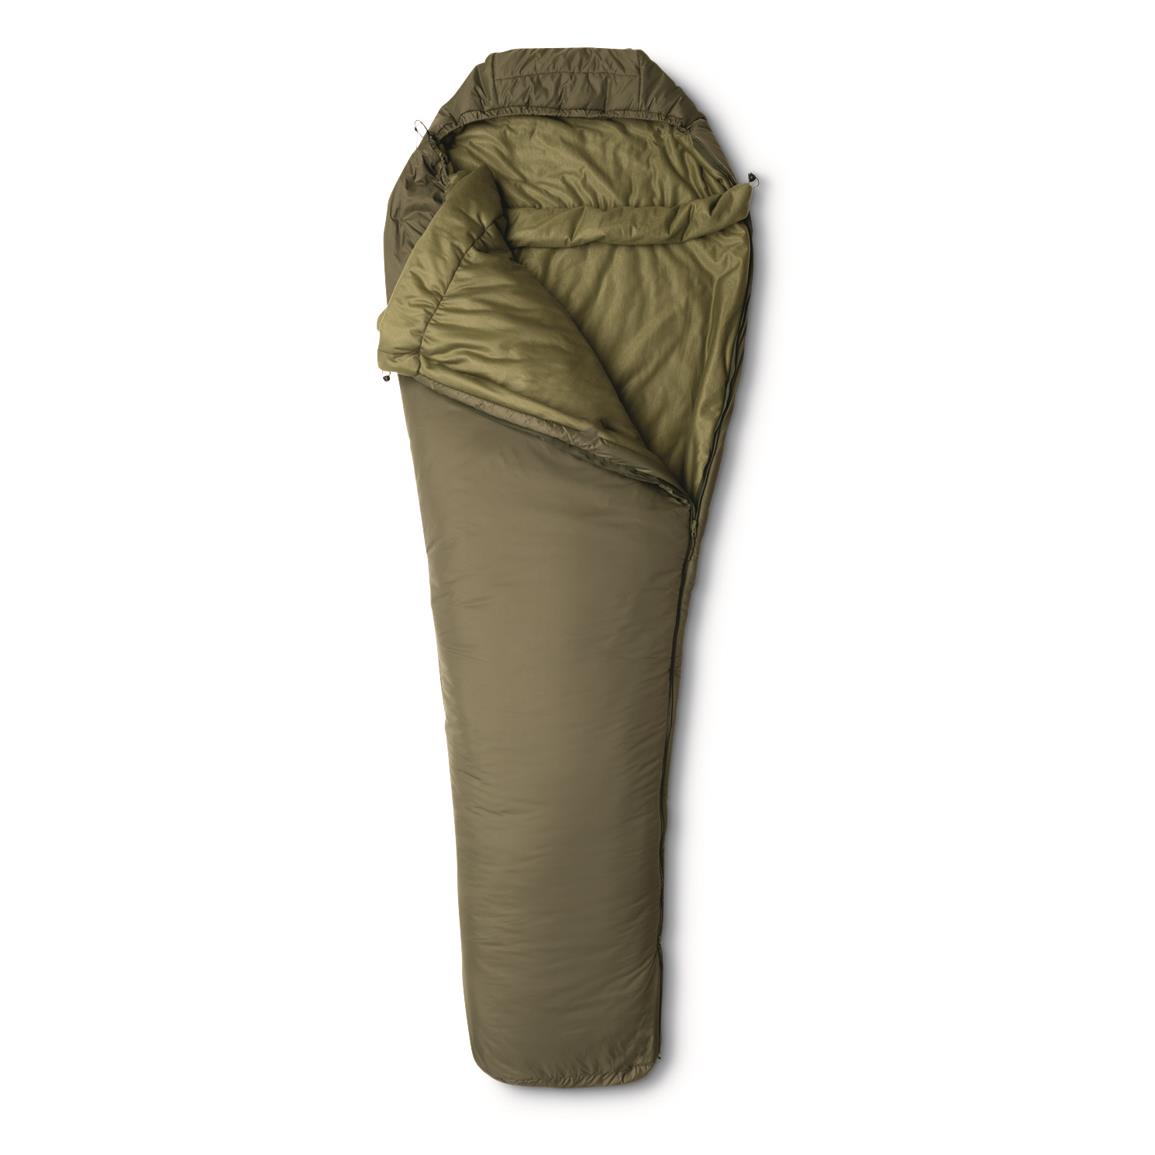 Snugpak Softie Tactical 3 Sleeping Bag, Olive